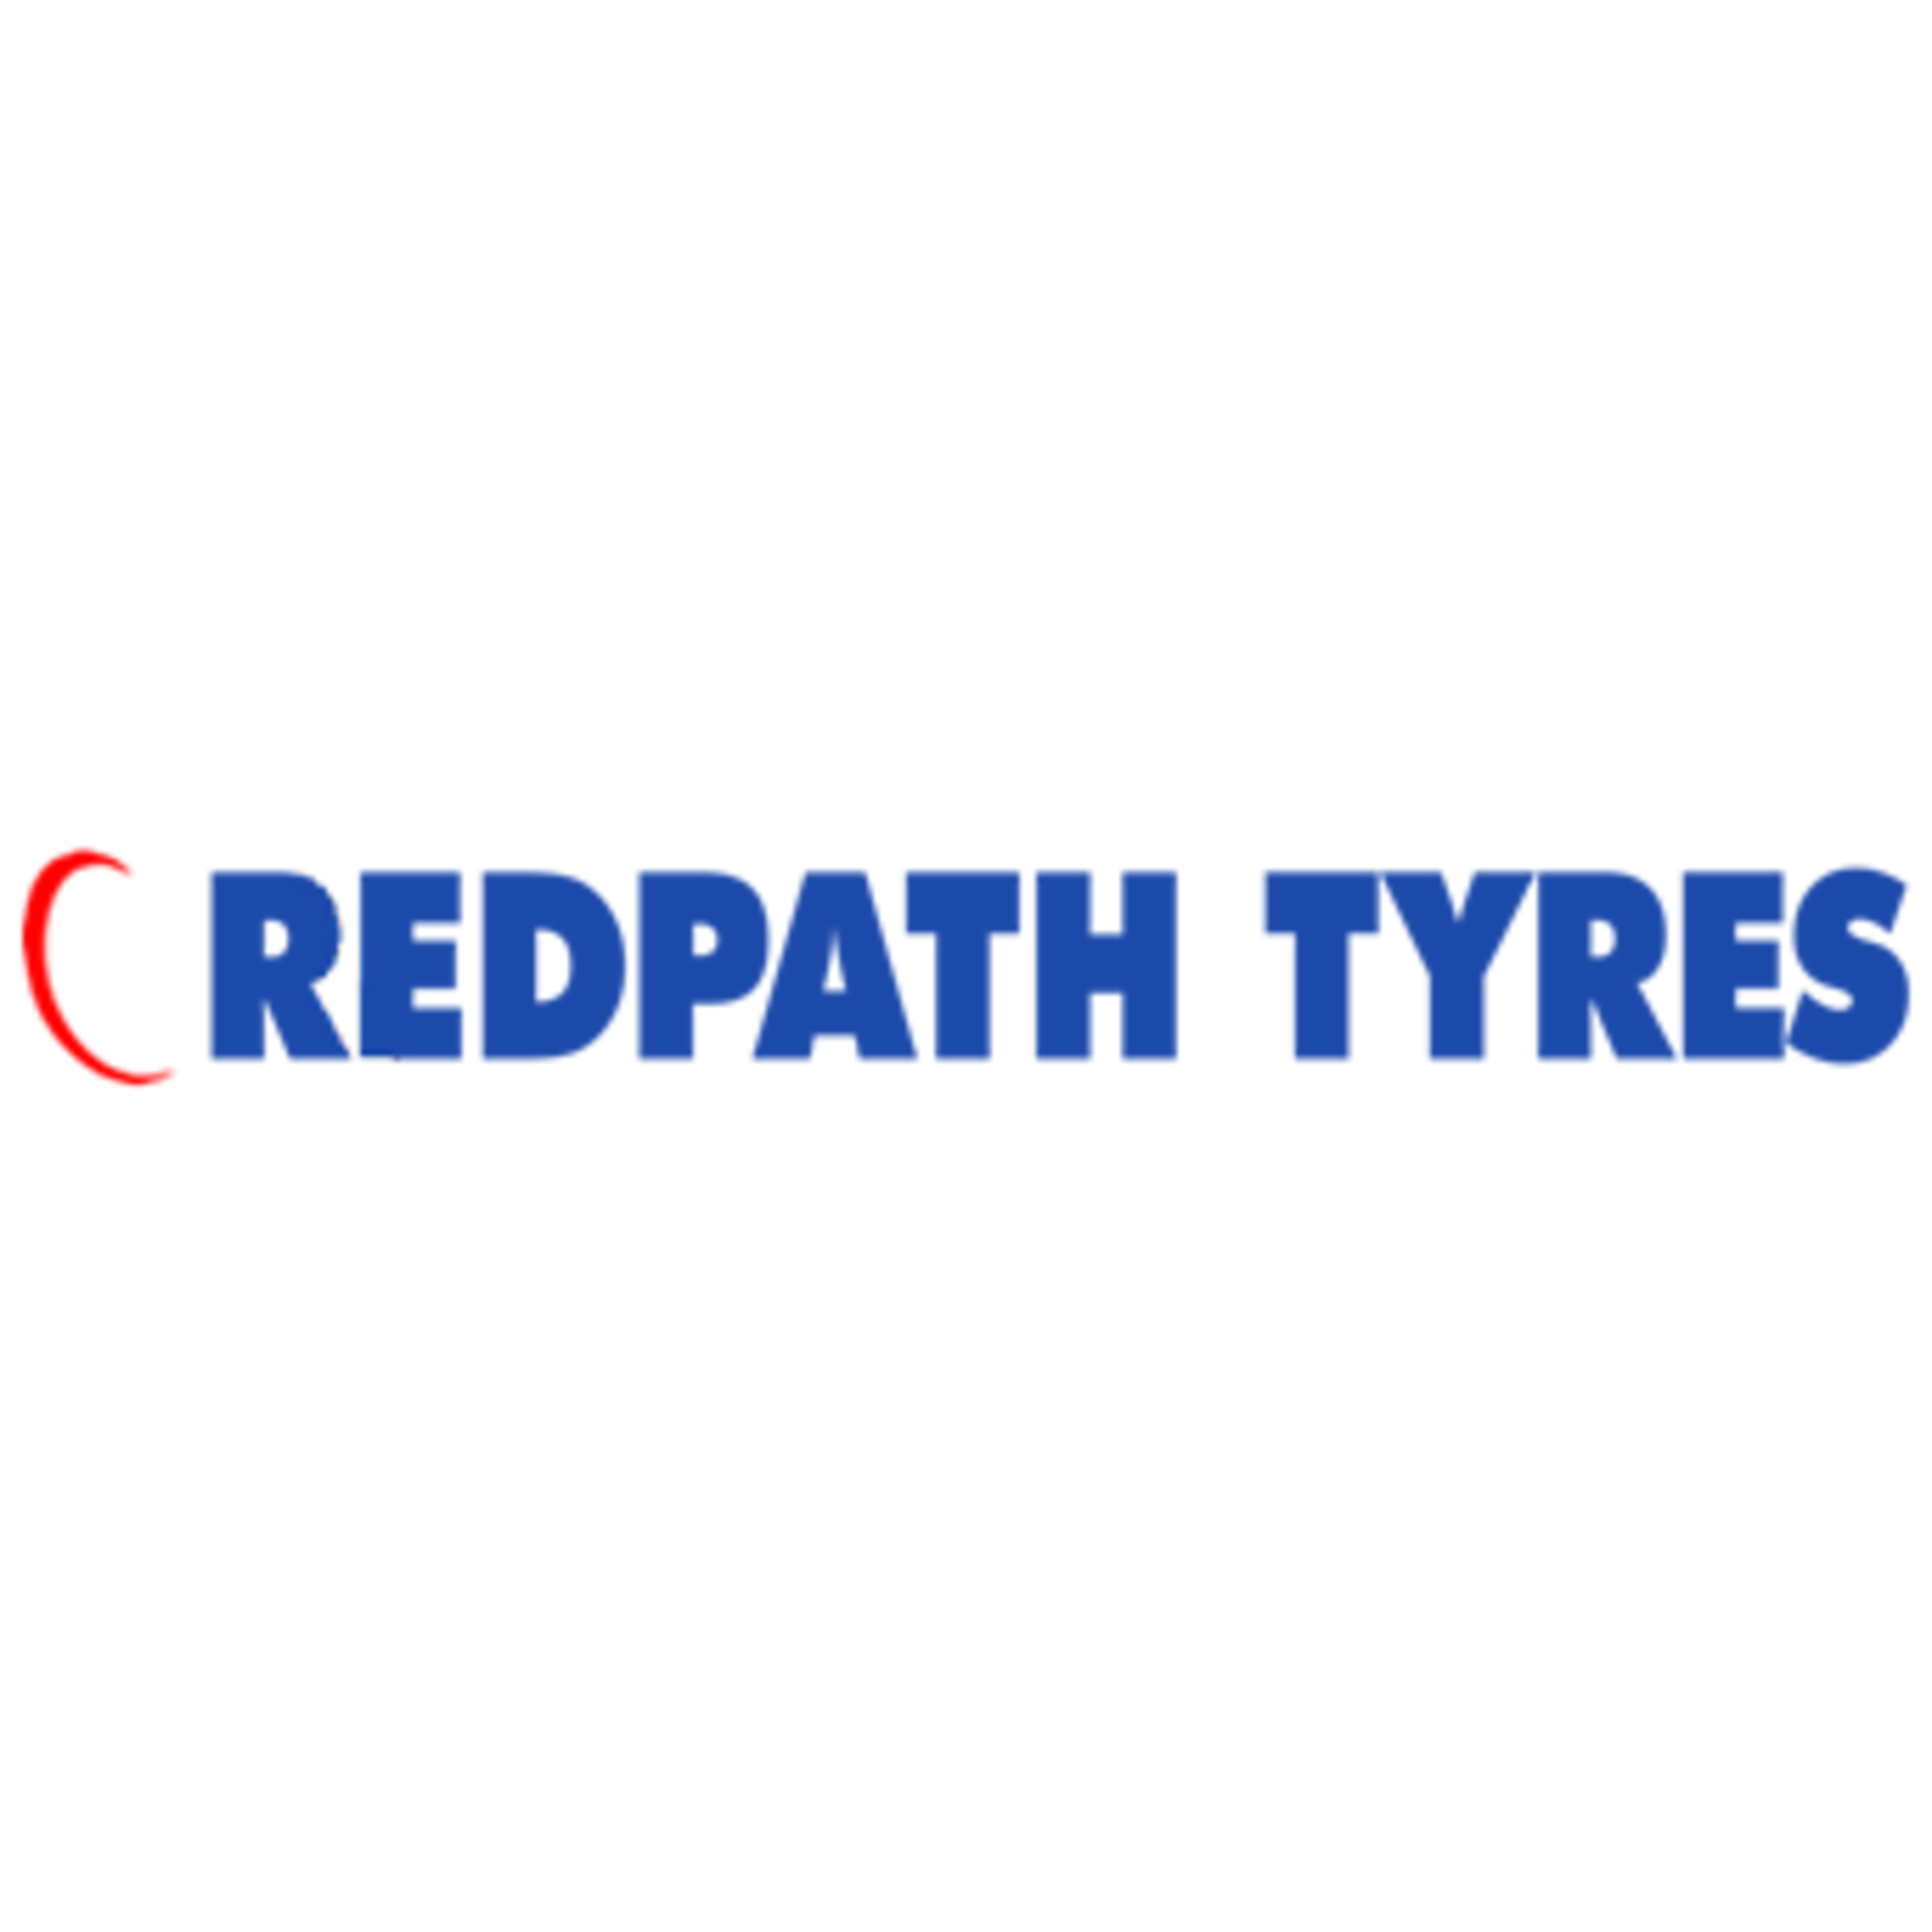 REDPATH TYRES LIMITED - EDINBURGH | Logo REDPATH TYRES LIMITED - EDINBURGH Edinburgh 01313 347387